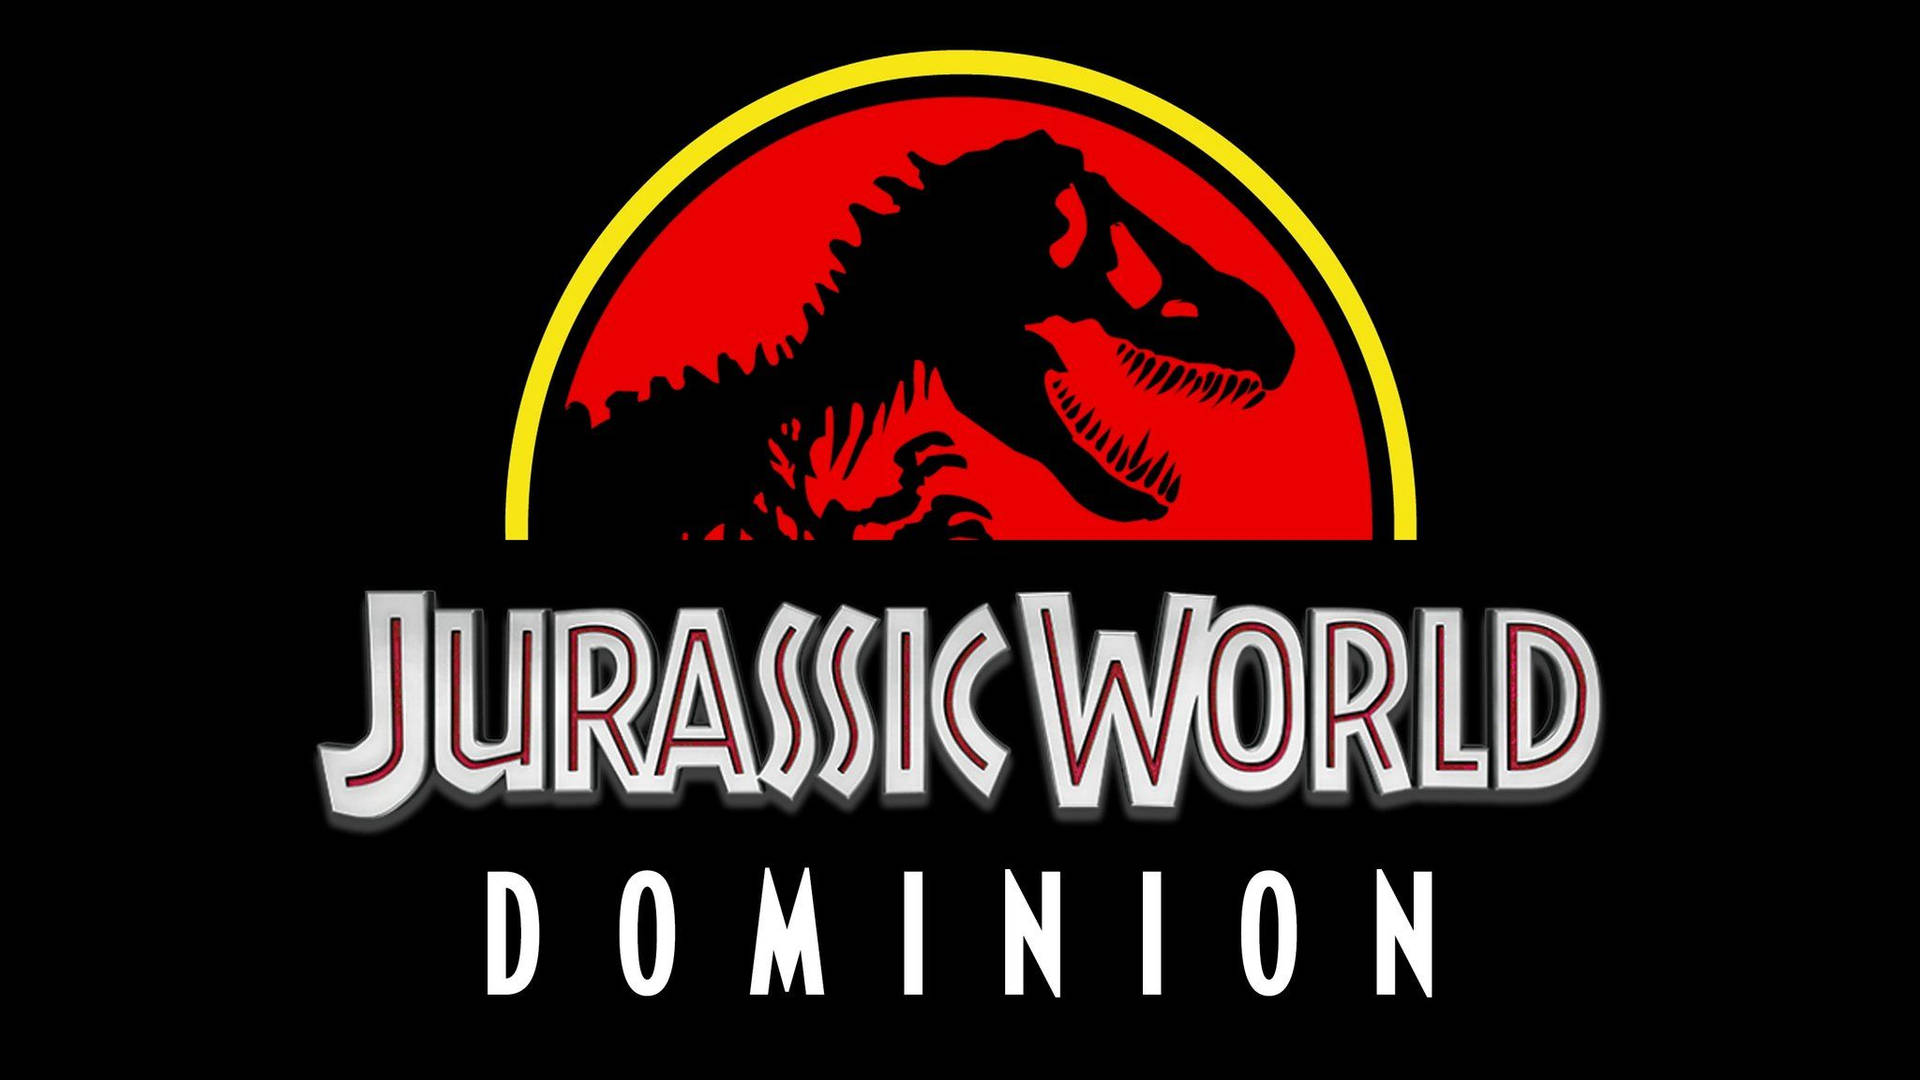 Jurassic World Dominion Red And Black Wallpaper